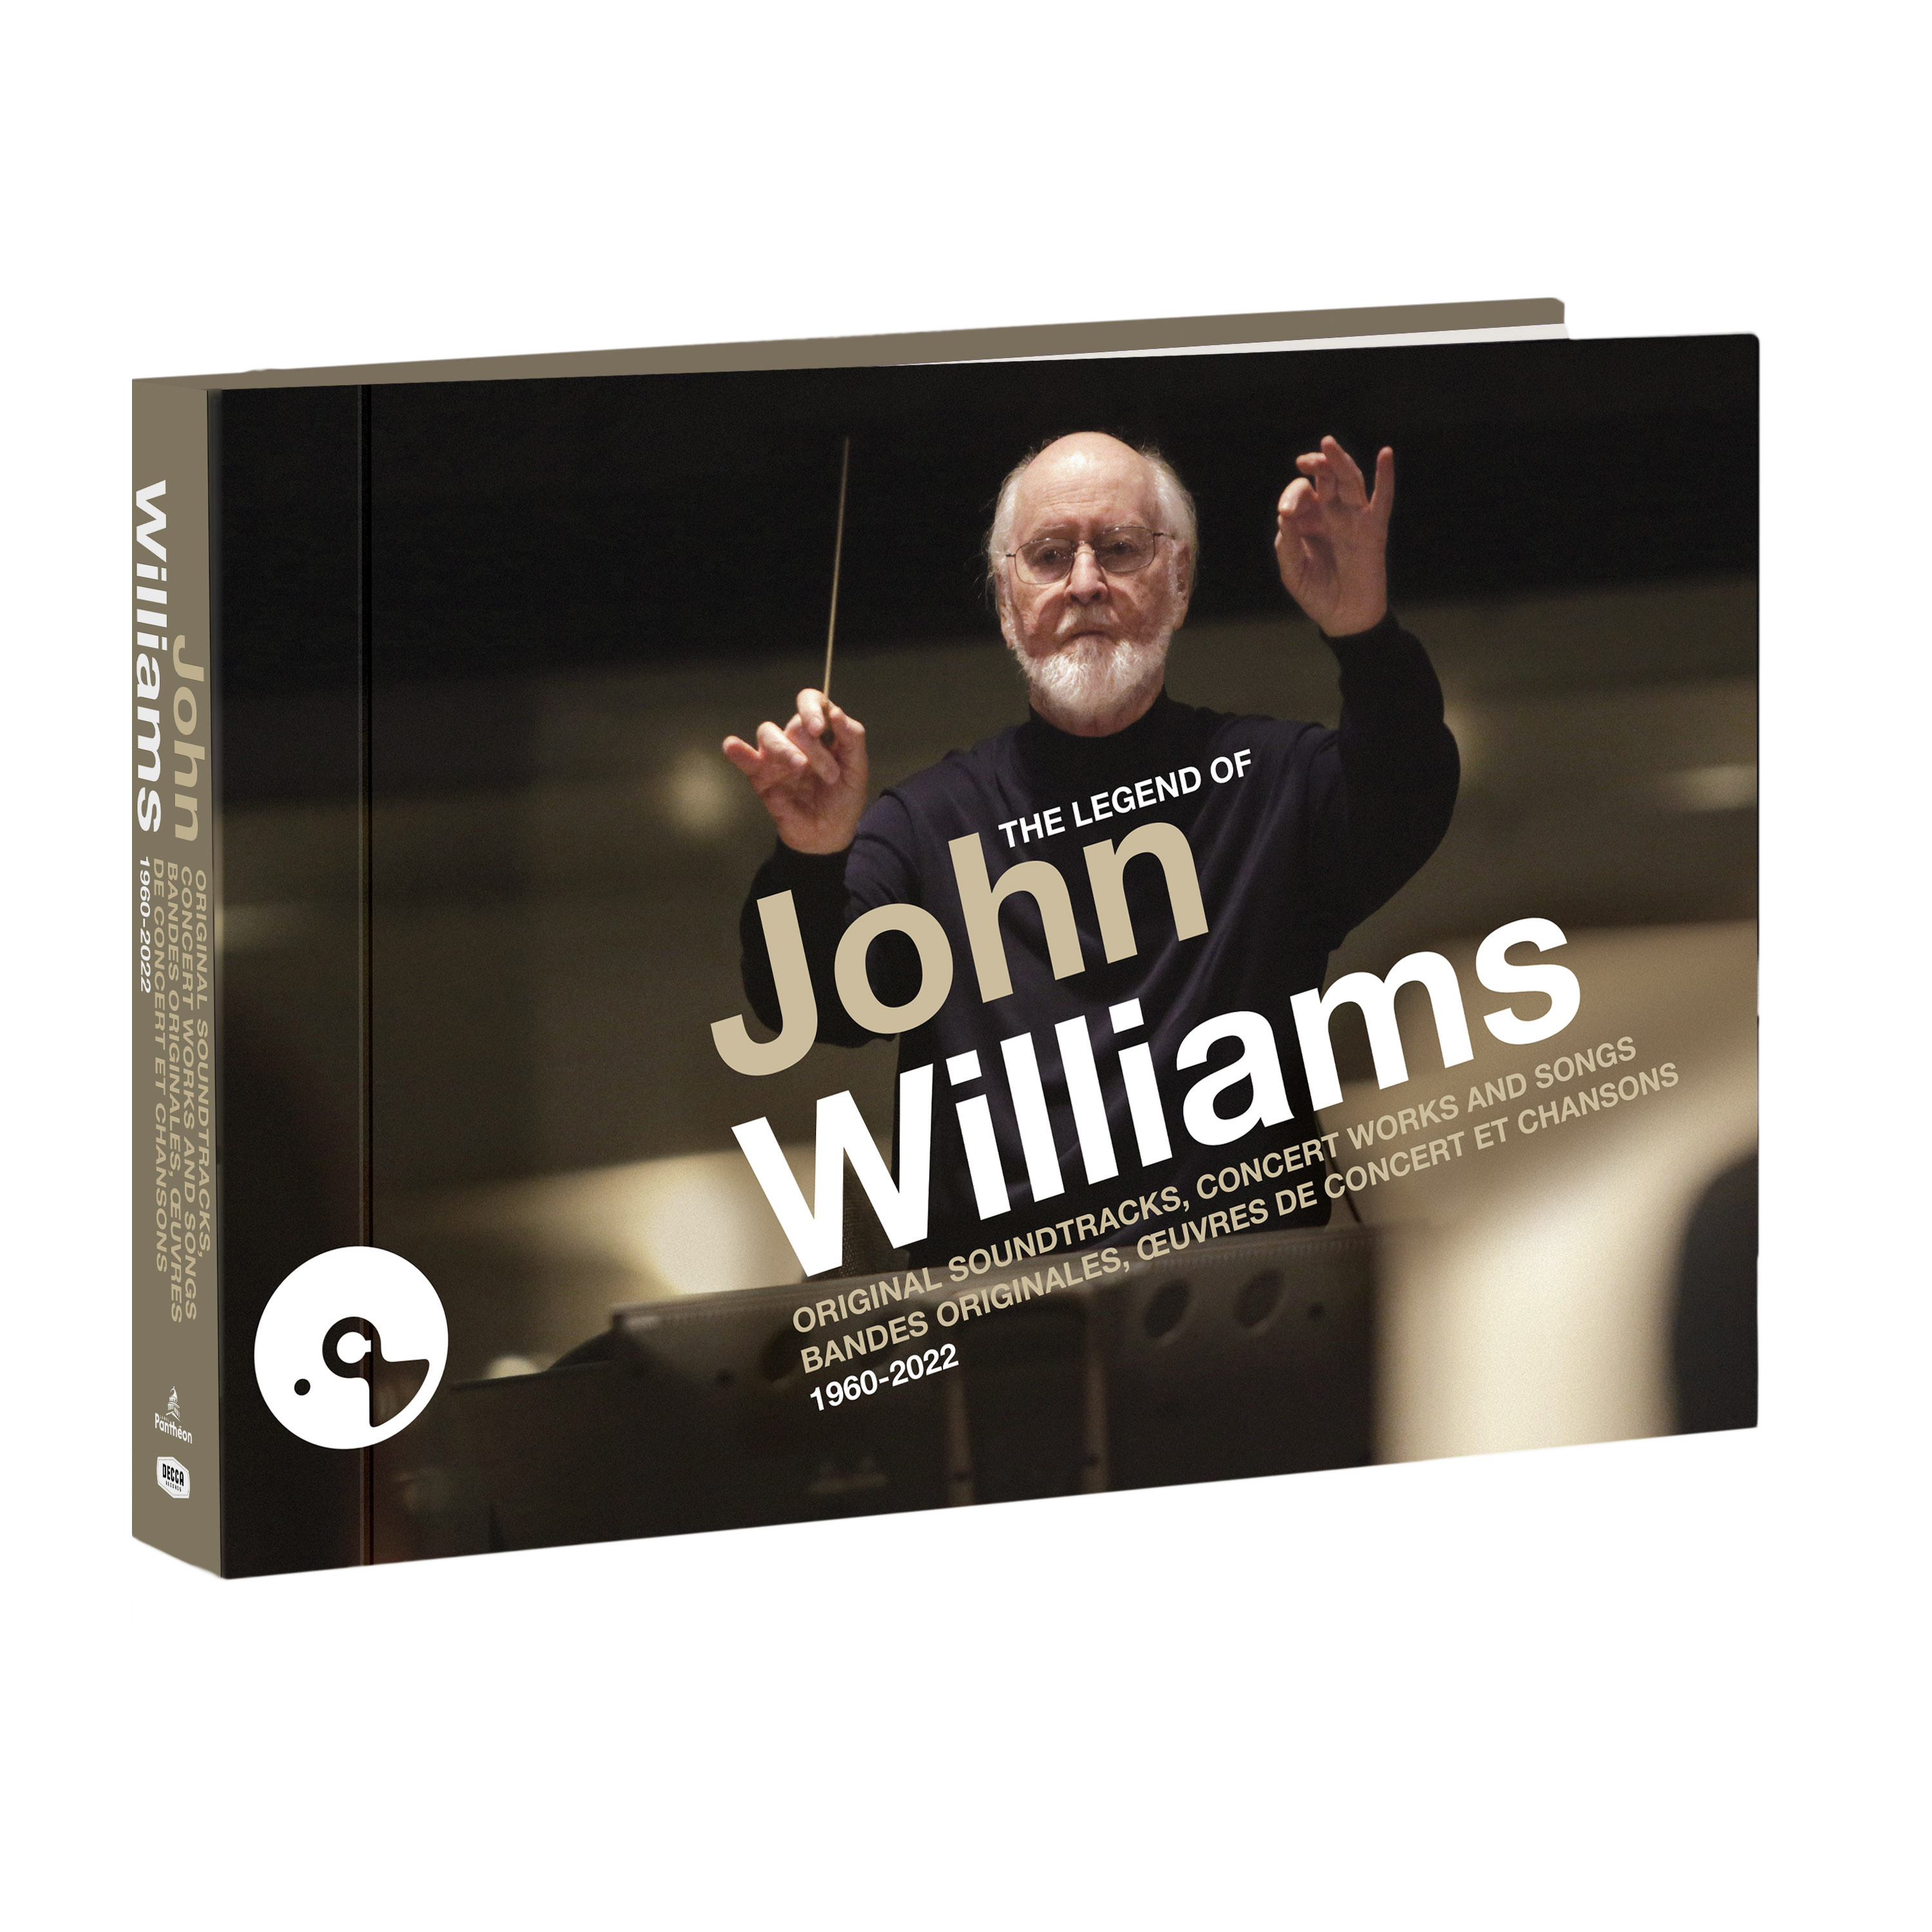 John Williams - The Legend of John Williams: 20CD Book Boxset